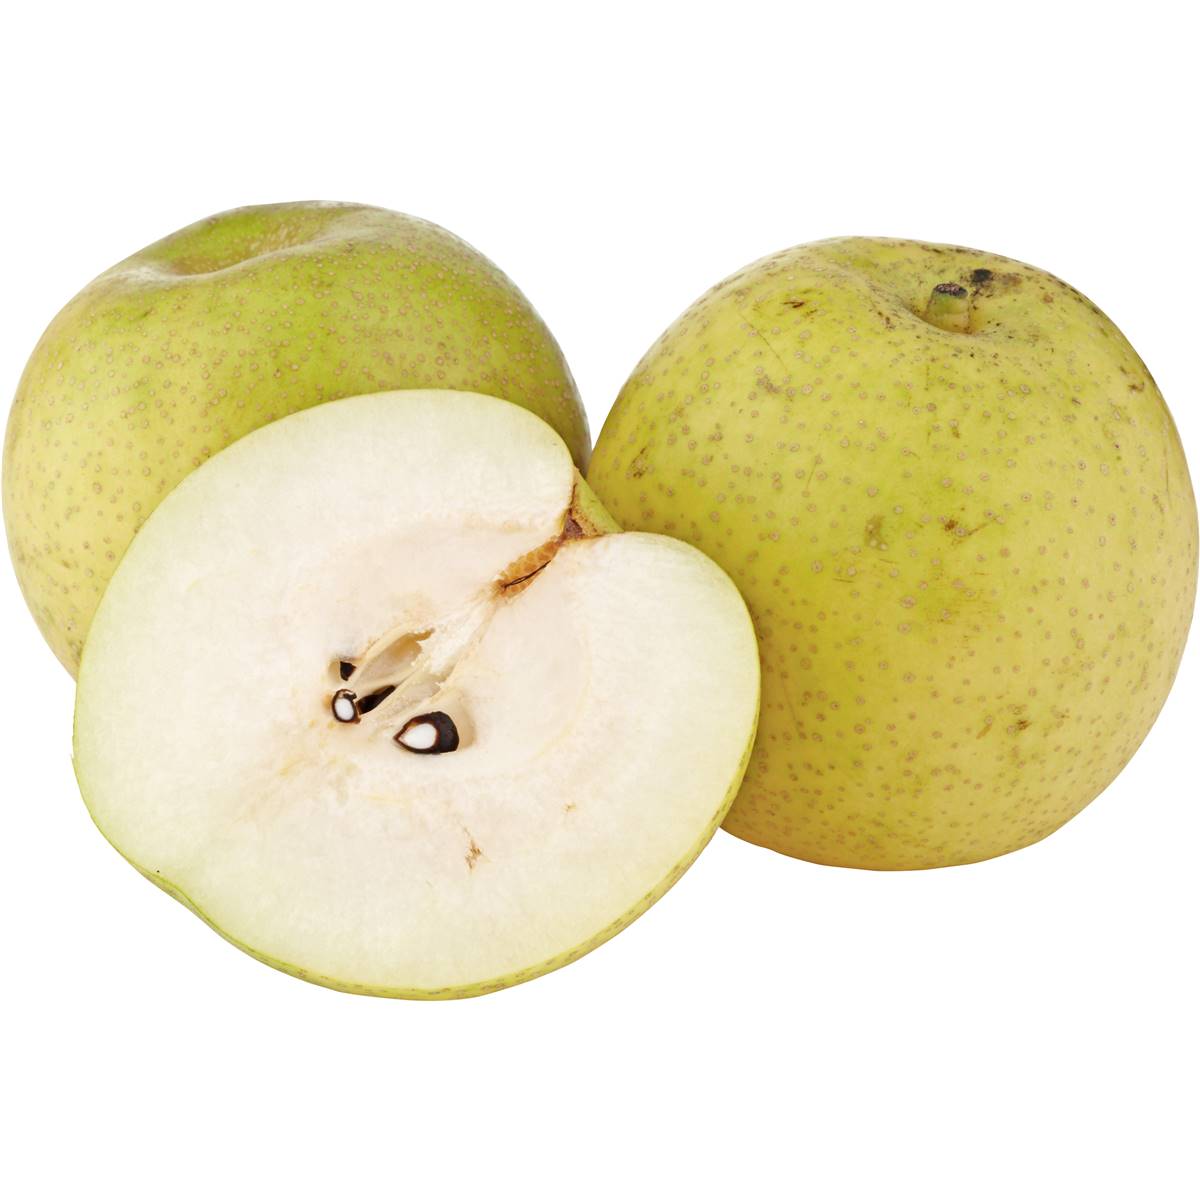 Nashi Pear Each